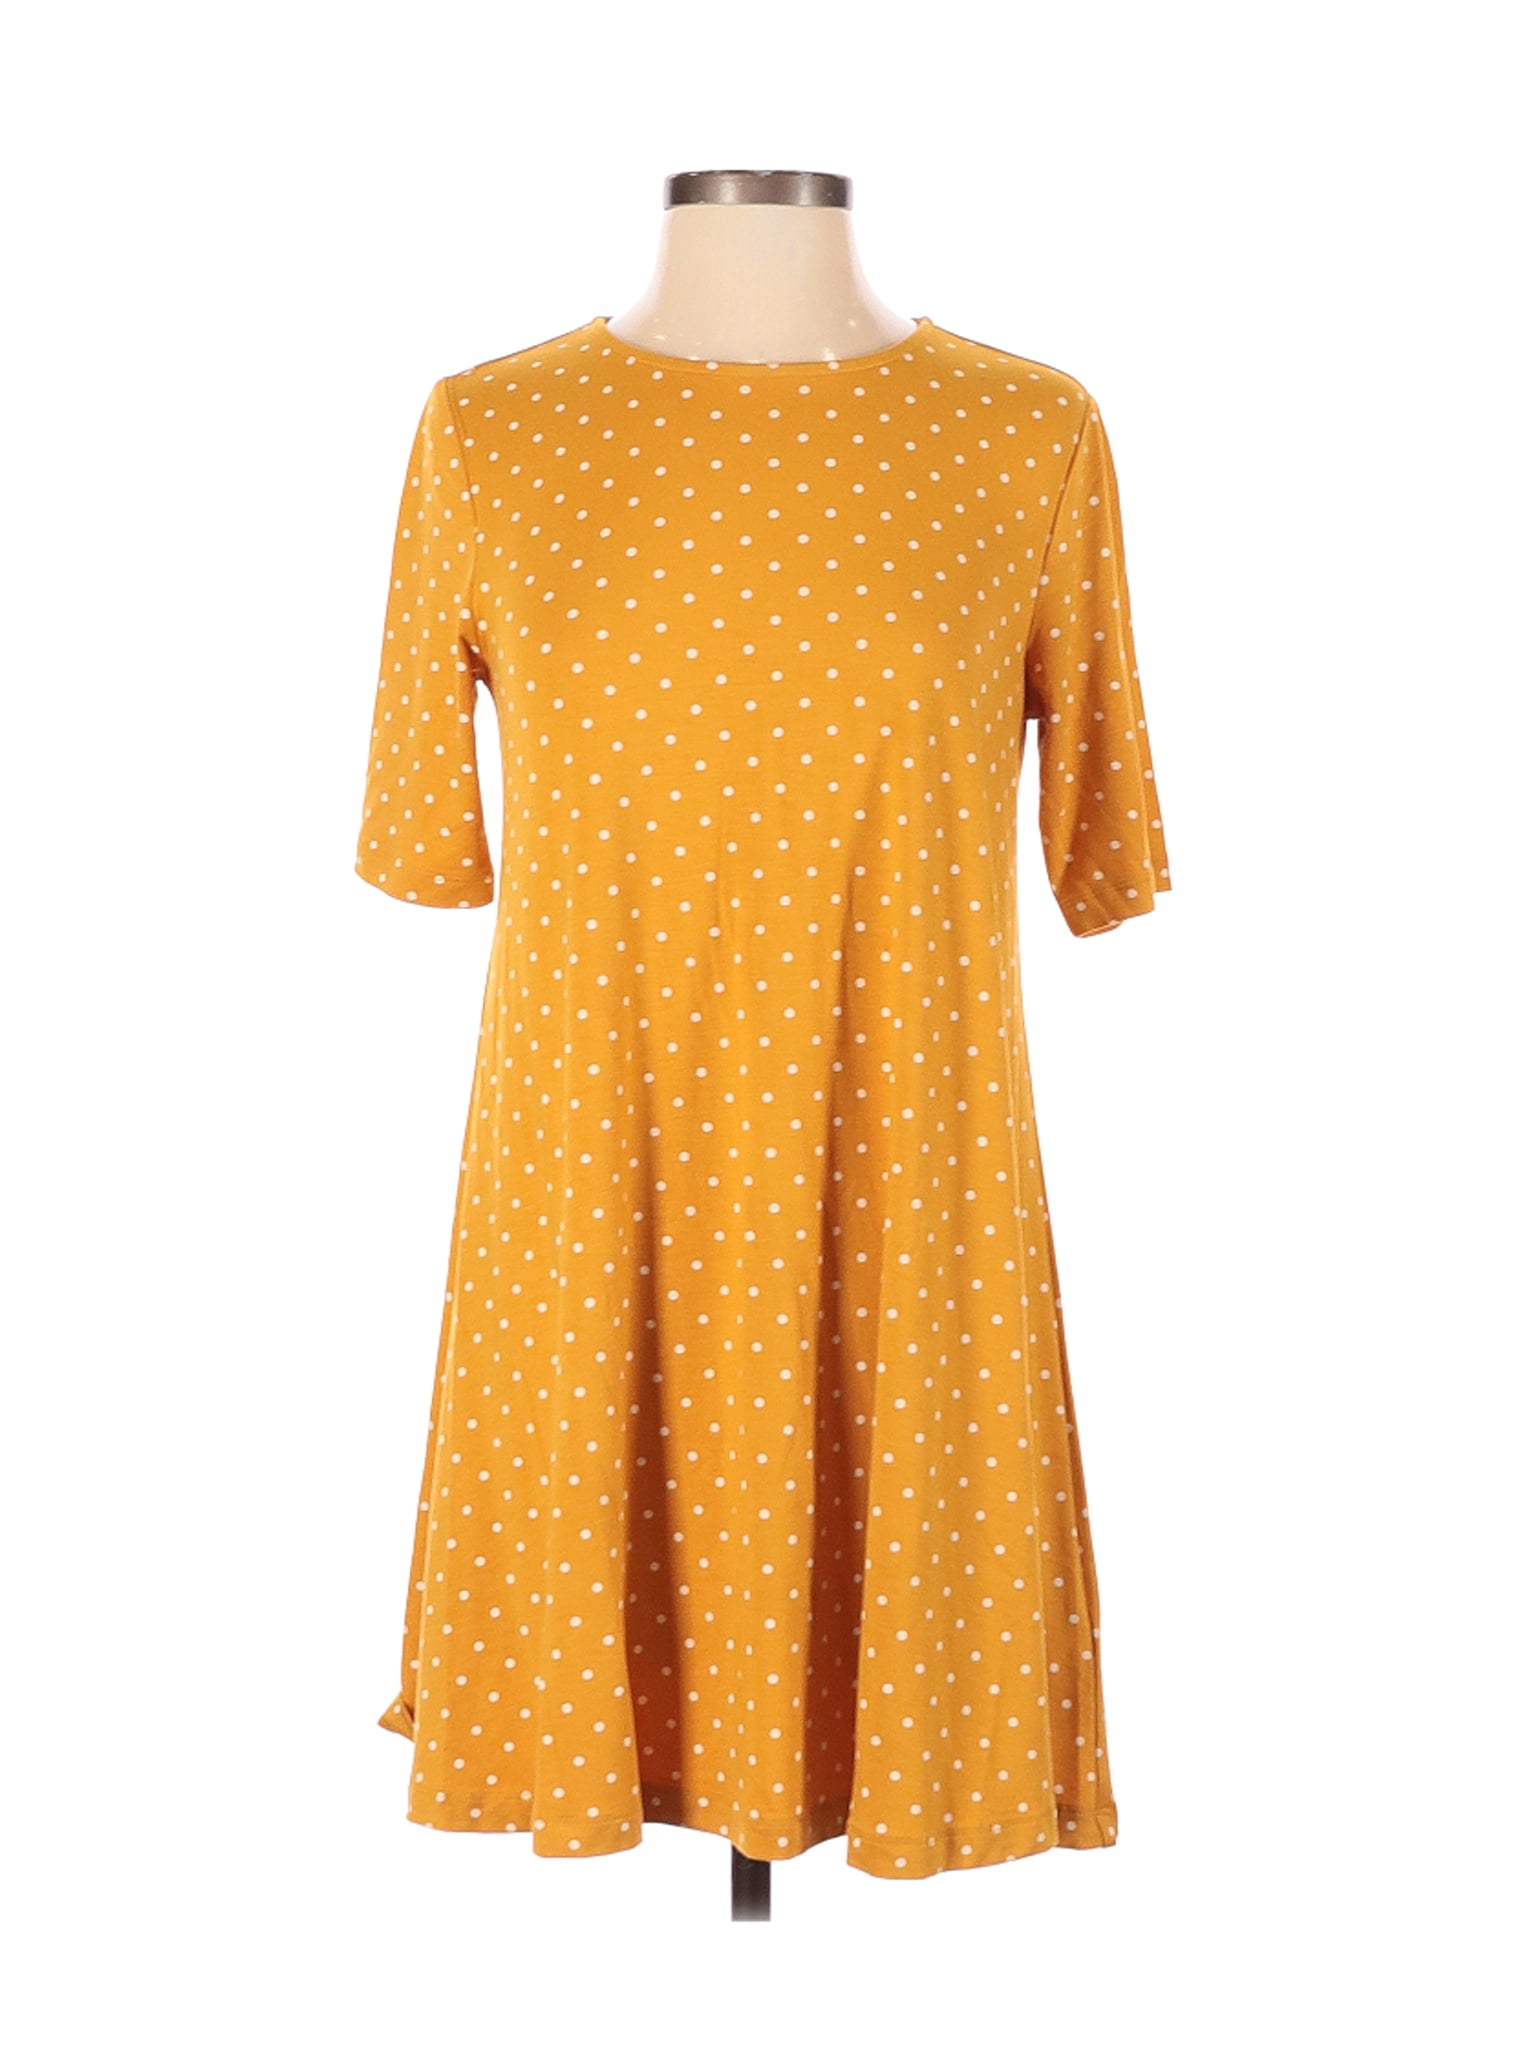 old navy yellow polka dot dress